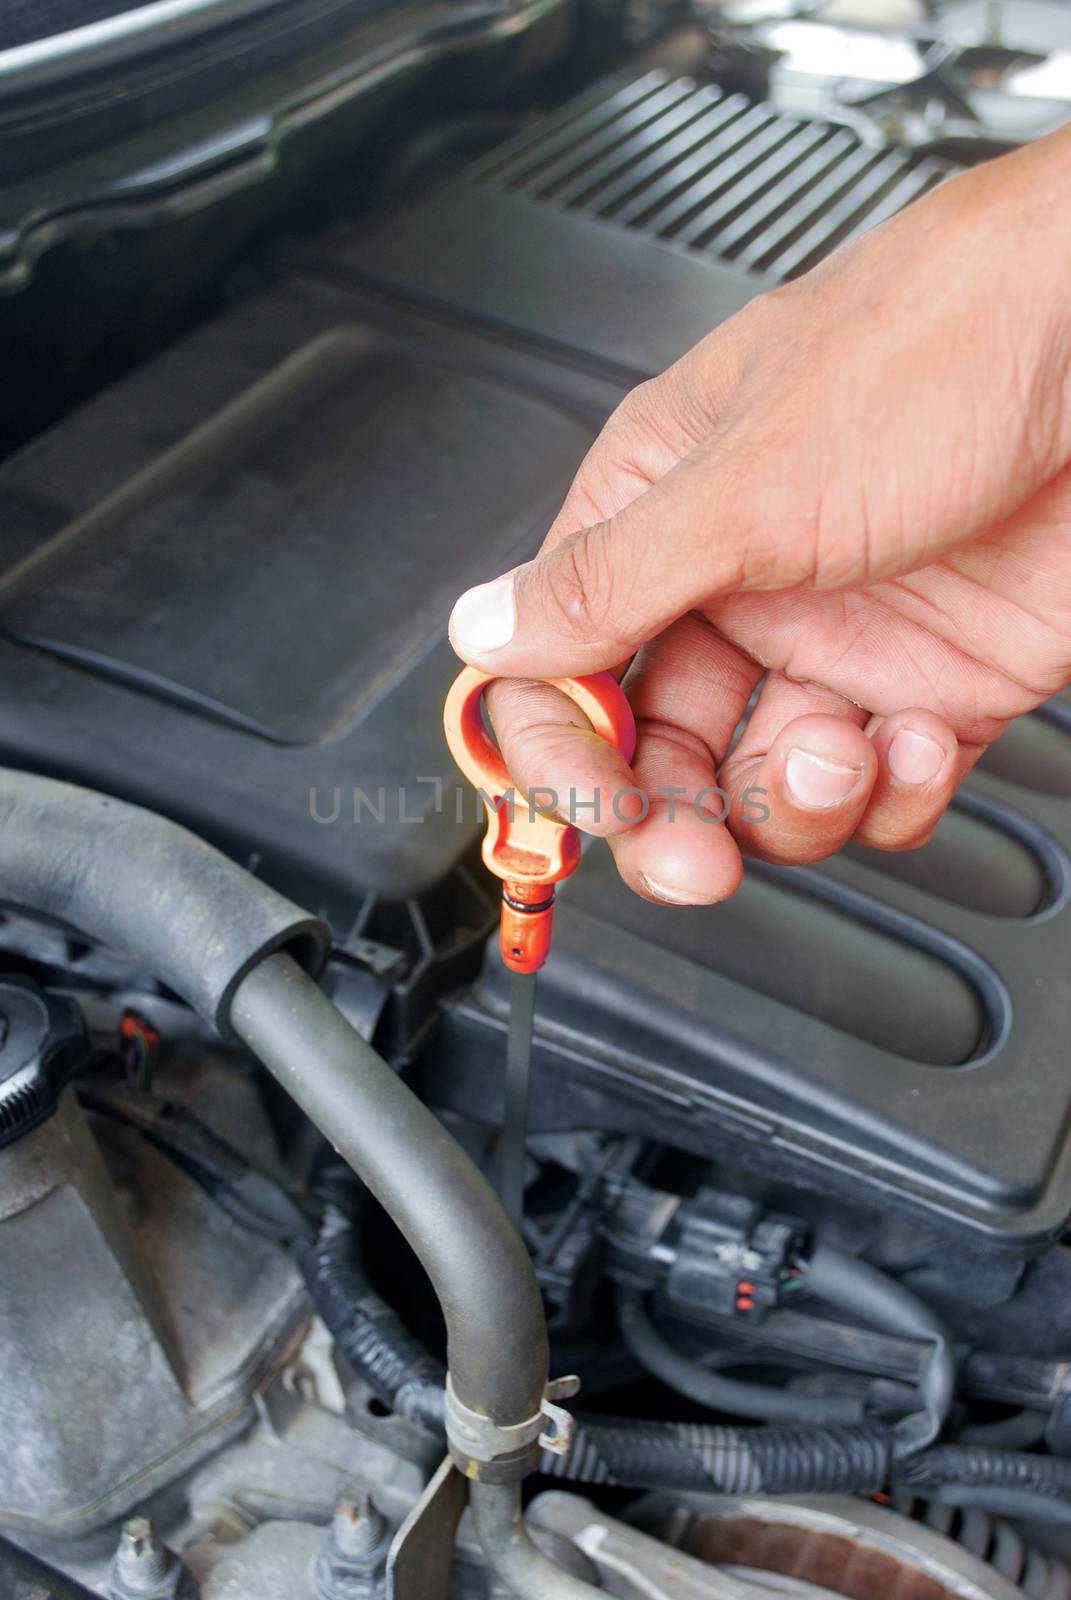 Engine system Maintenance Engine check Car care equipment.Check level